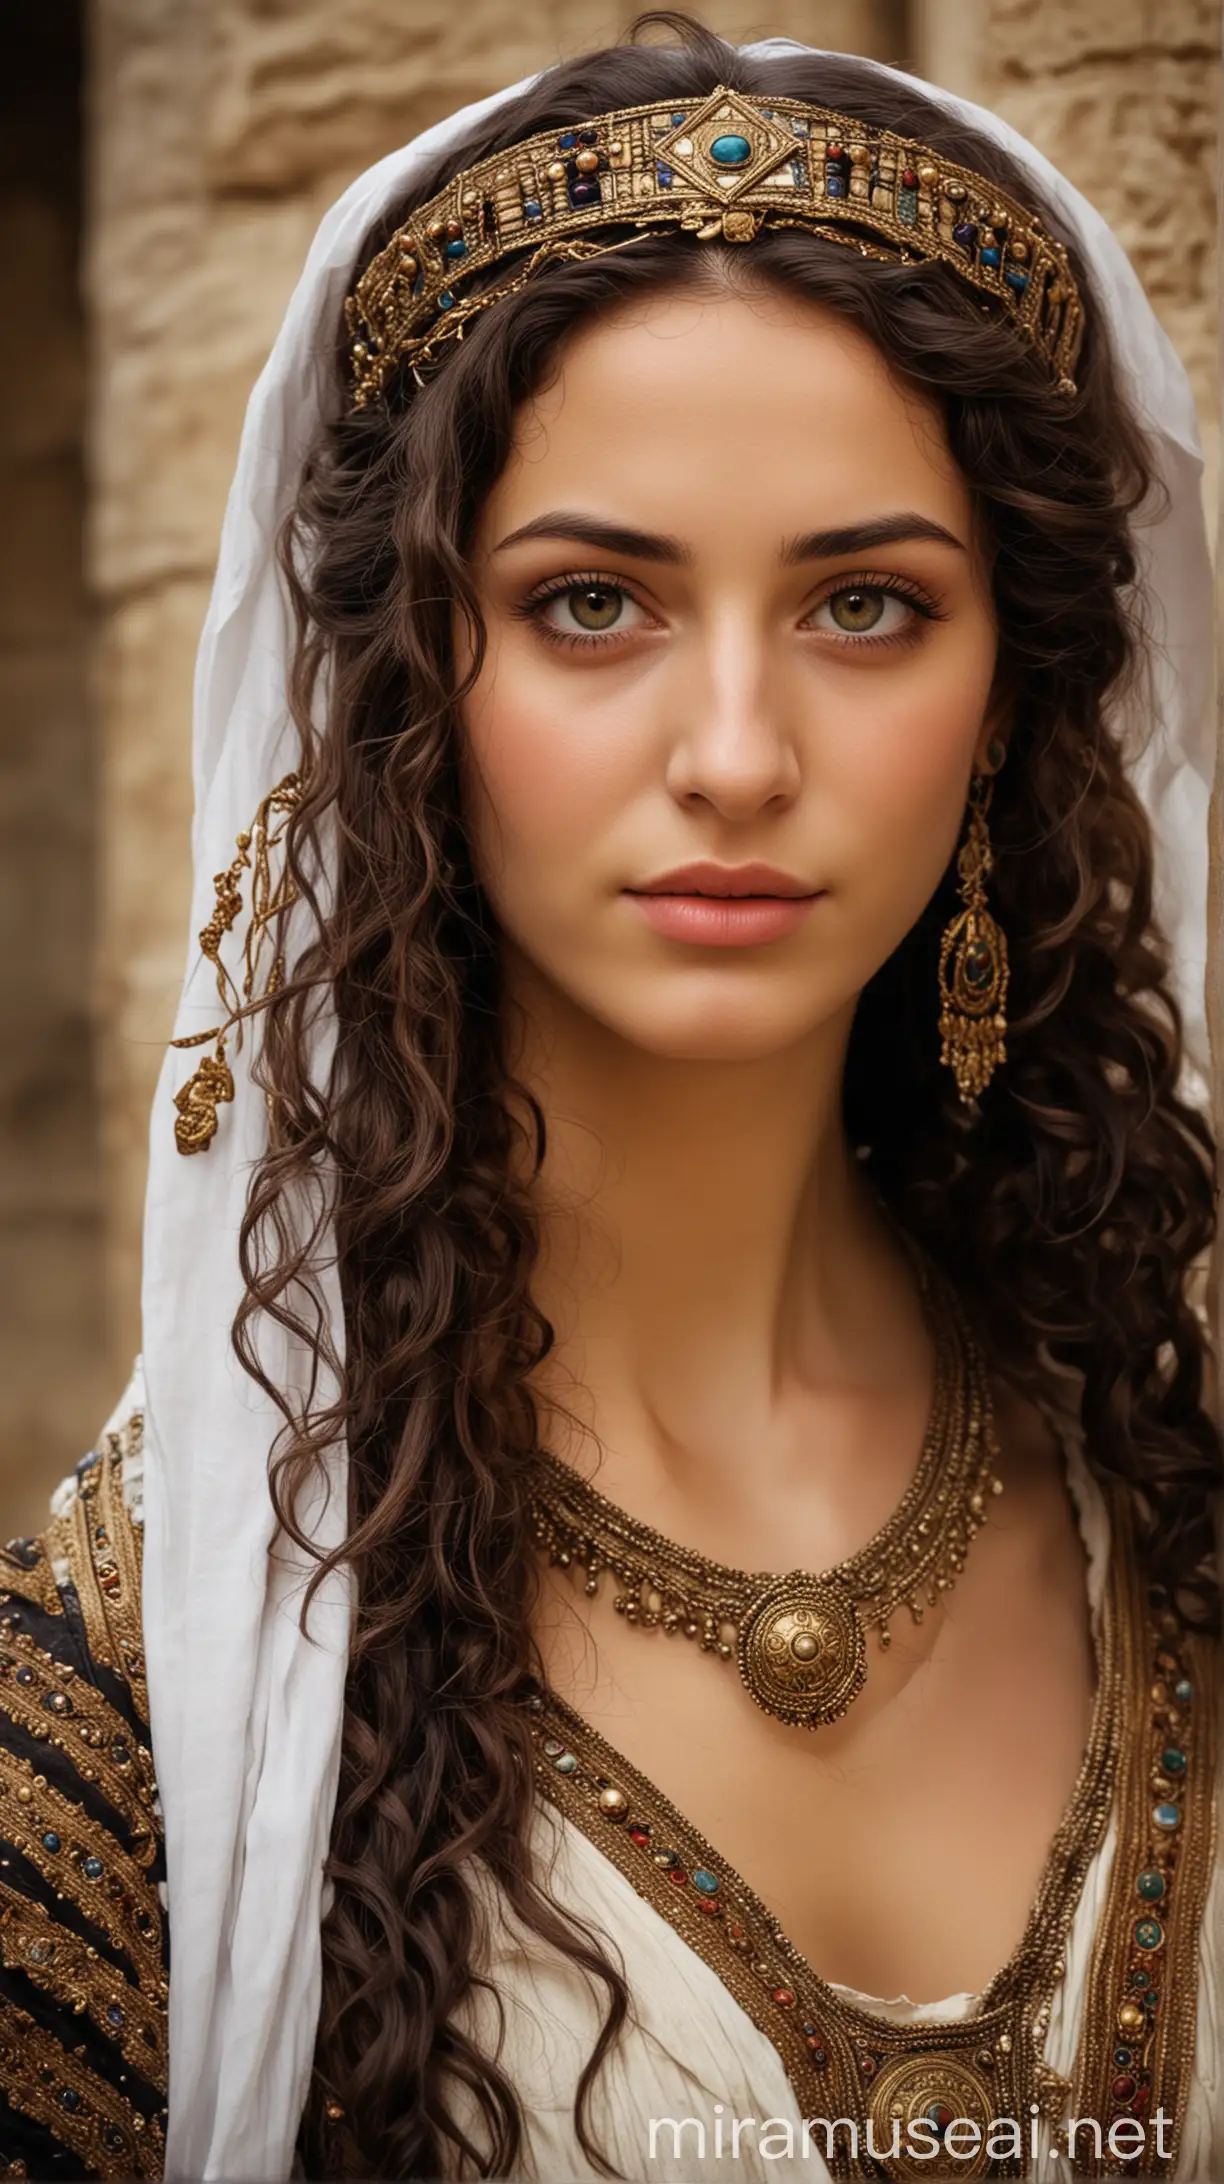 A beautiful Jewish woman in ancient world .